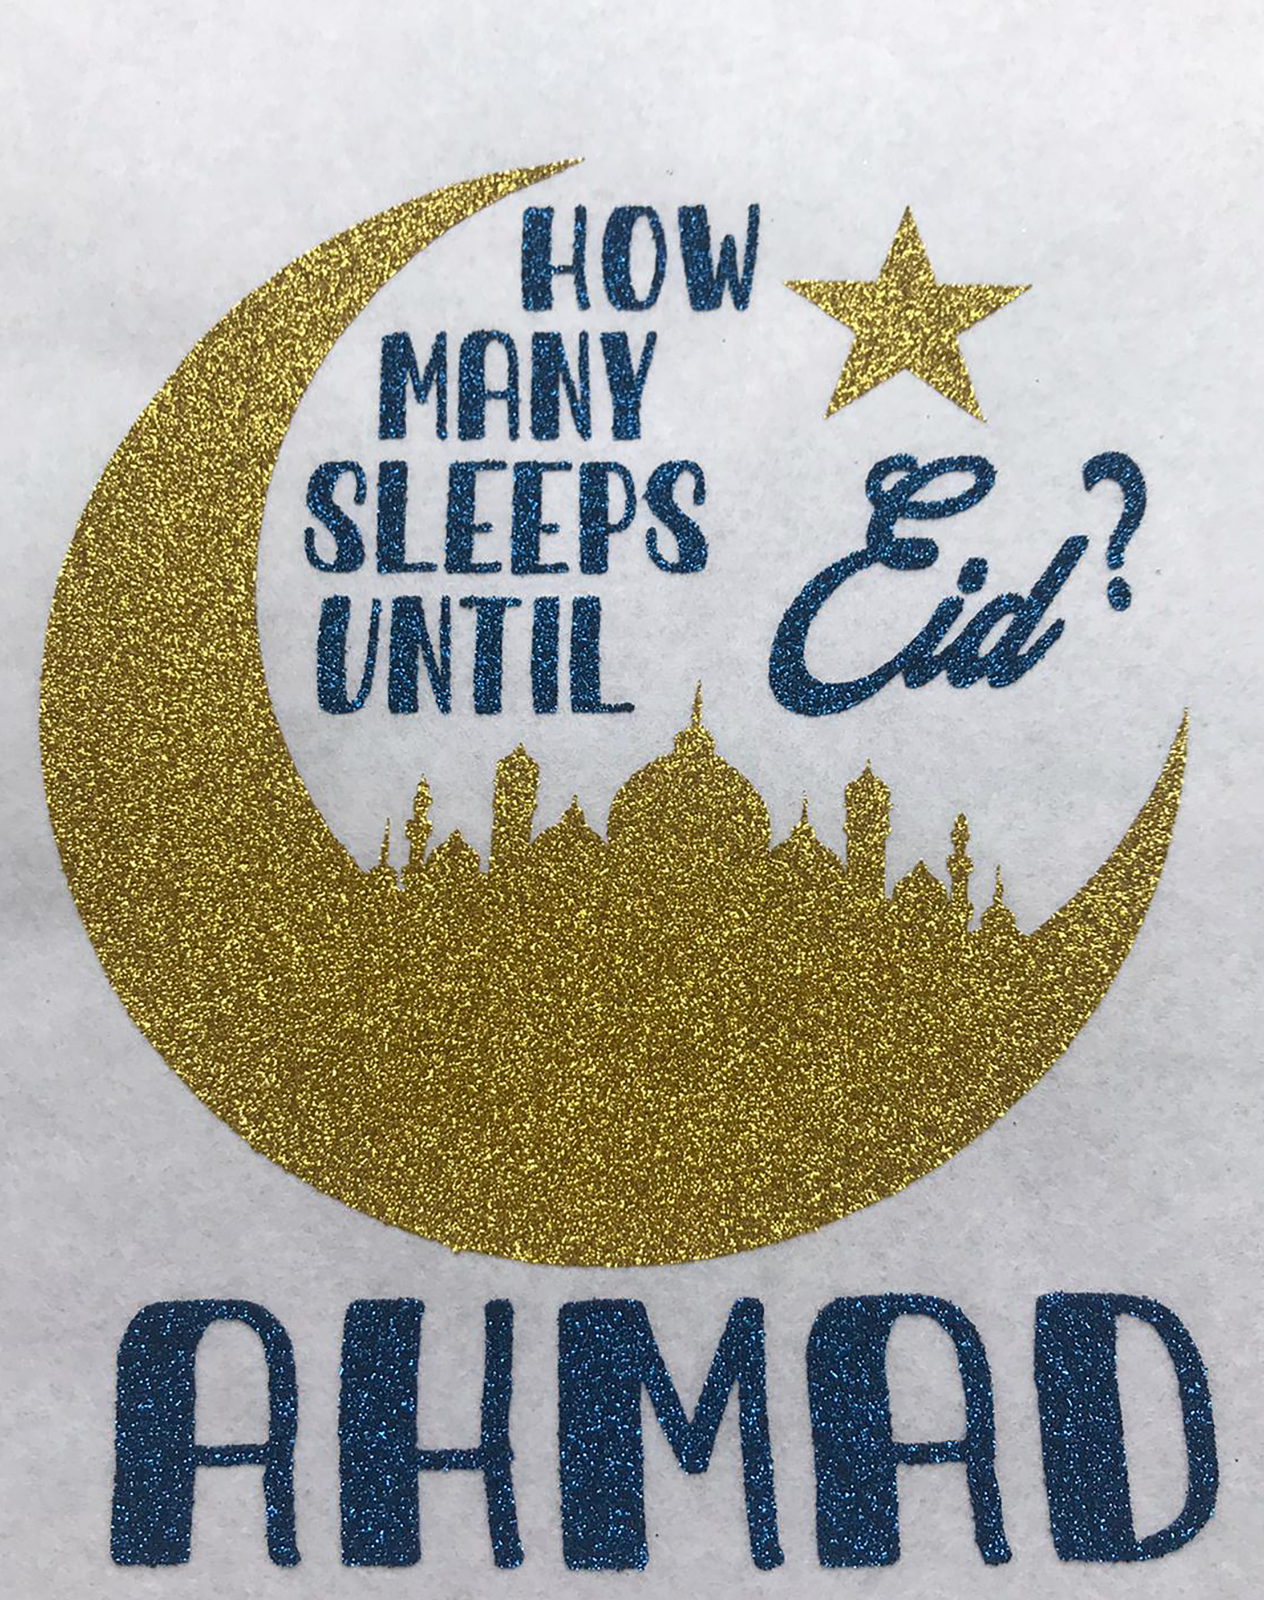 Personalised Ramadan/How many sleeps until Eid Sparkly Printed Cotton Pyjamas, Gift PJ HMS